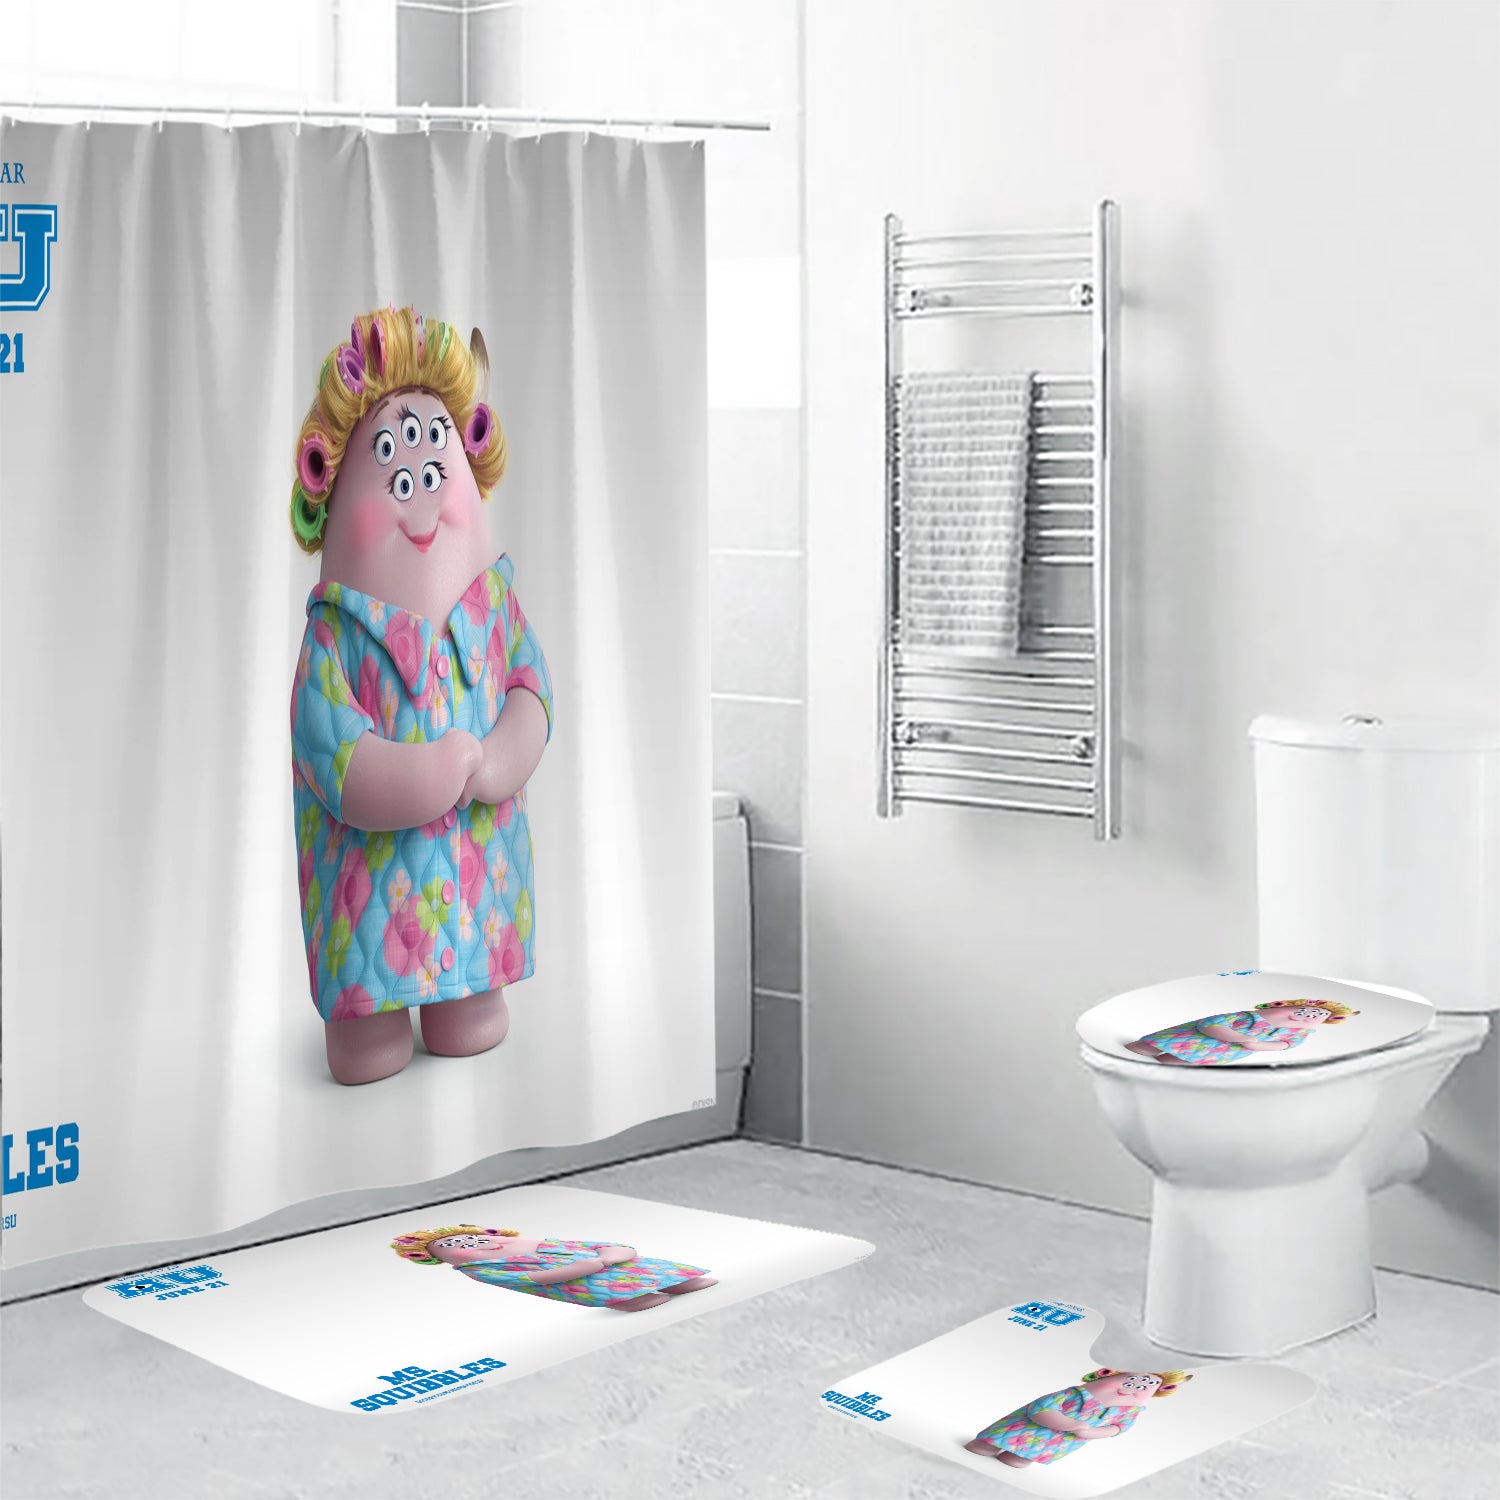 Characters Ms Squibbles Monsters Inc Monsters University Movie Disney Pixar Waterproof Shower Curtain Non-Slip Toilet Lid Cover Bath Mat - Bathroom Set